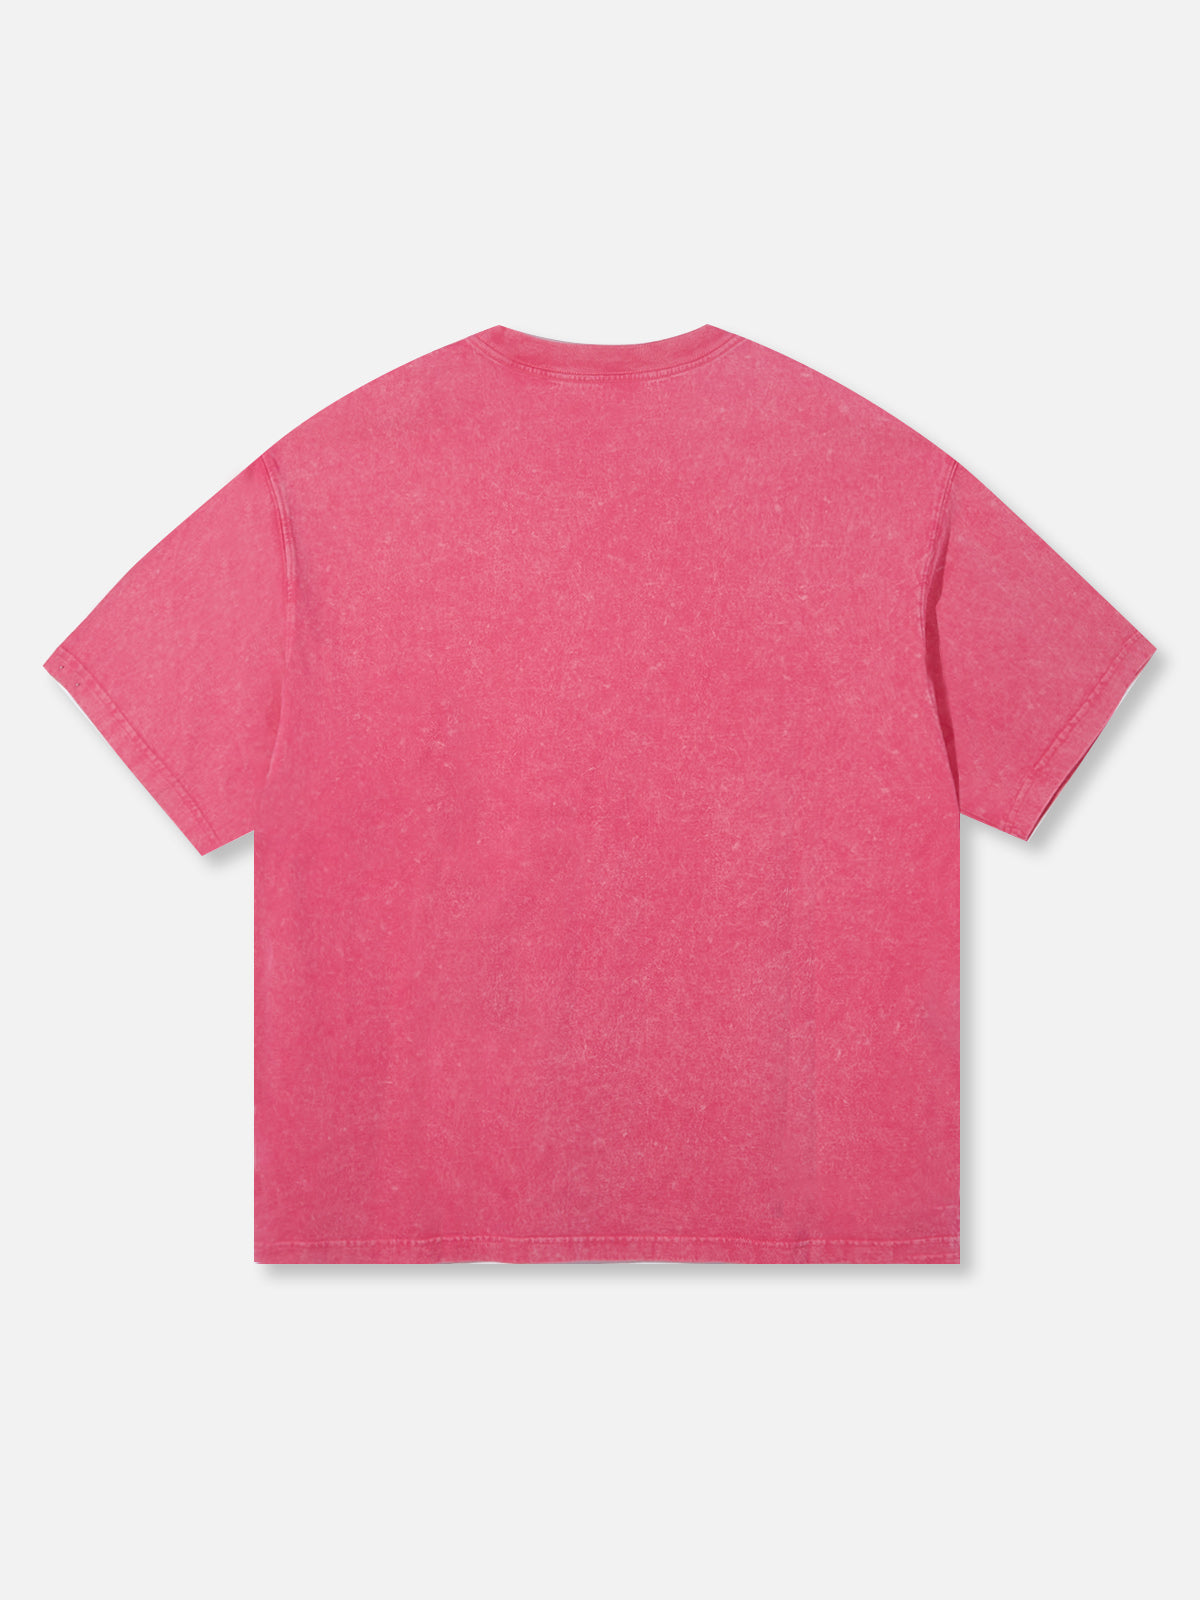 BOUNCE BACK© pink diamond lips print T-shirt